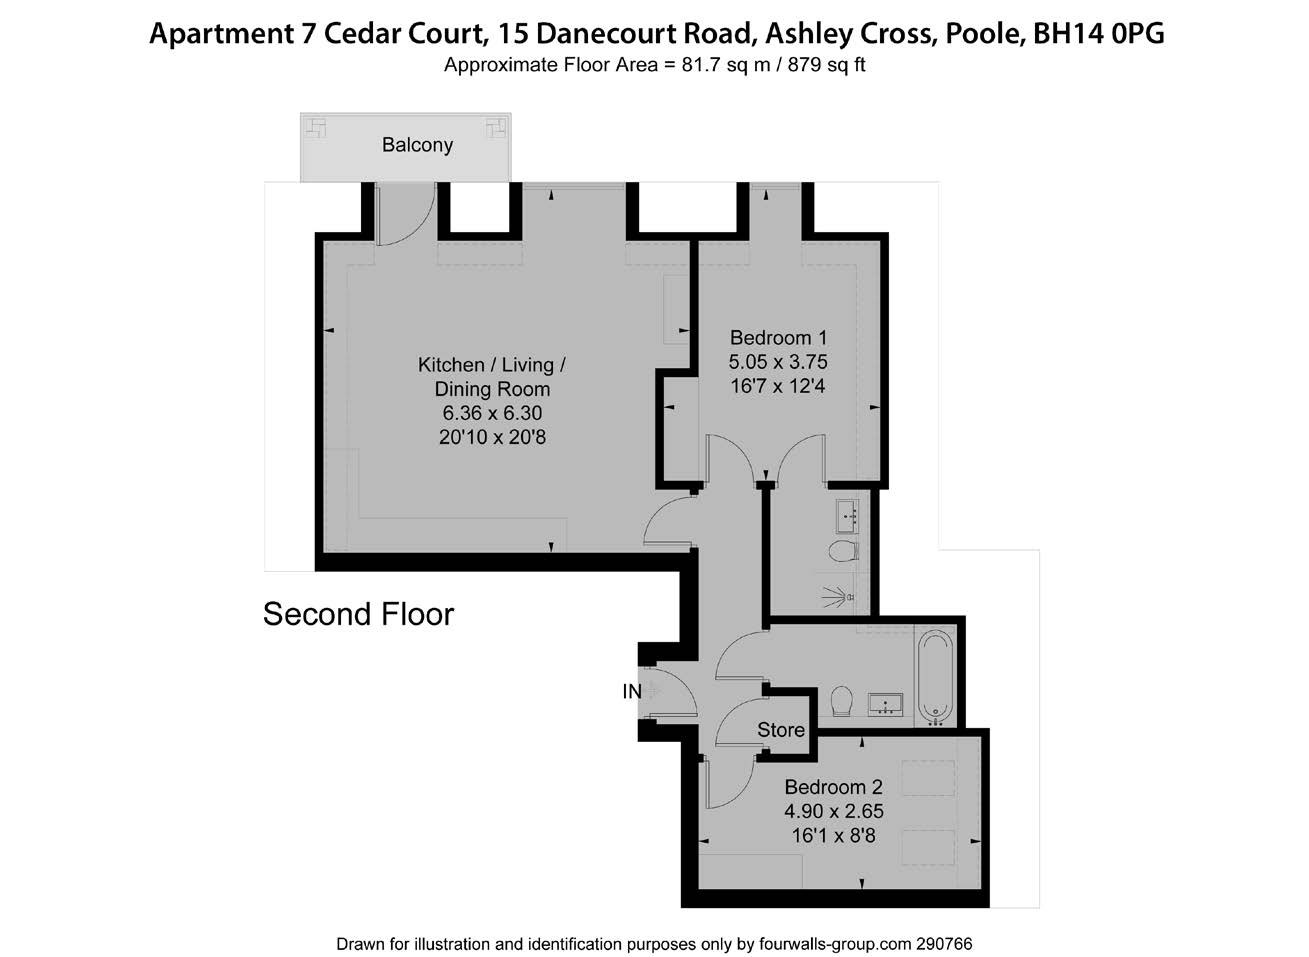 Apartment 7 Cedar Court floor plan